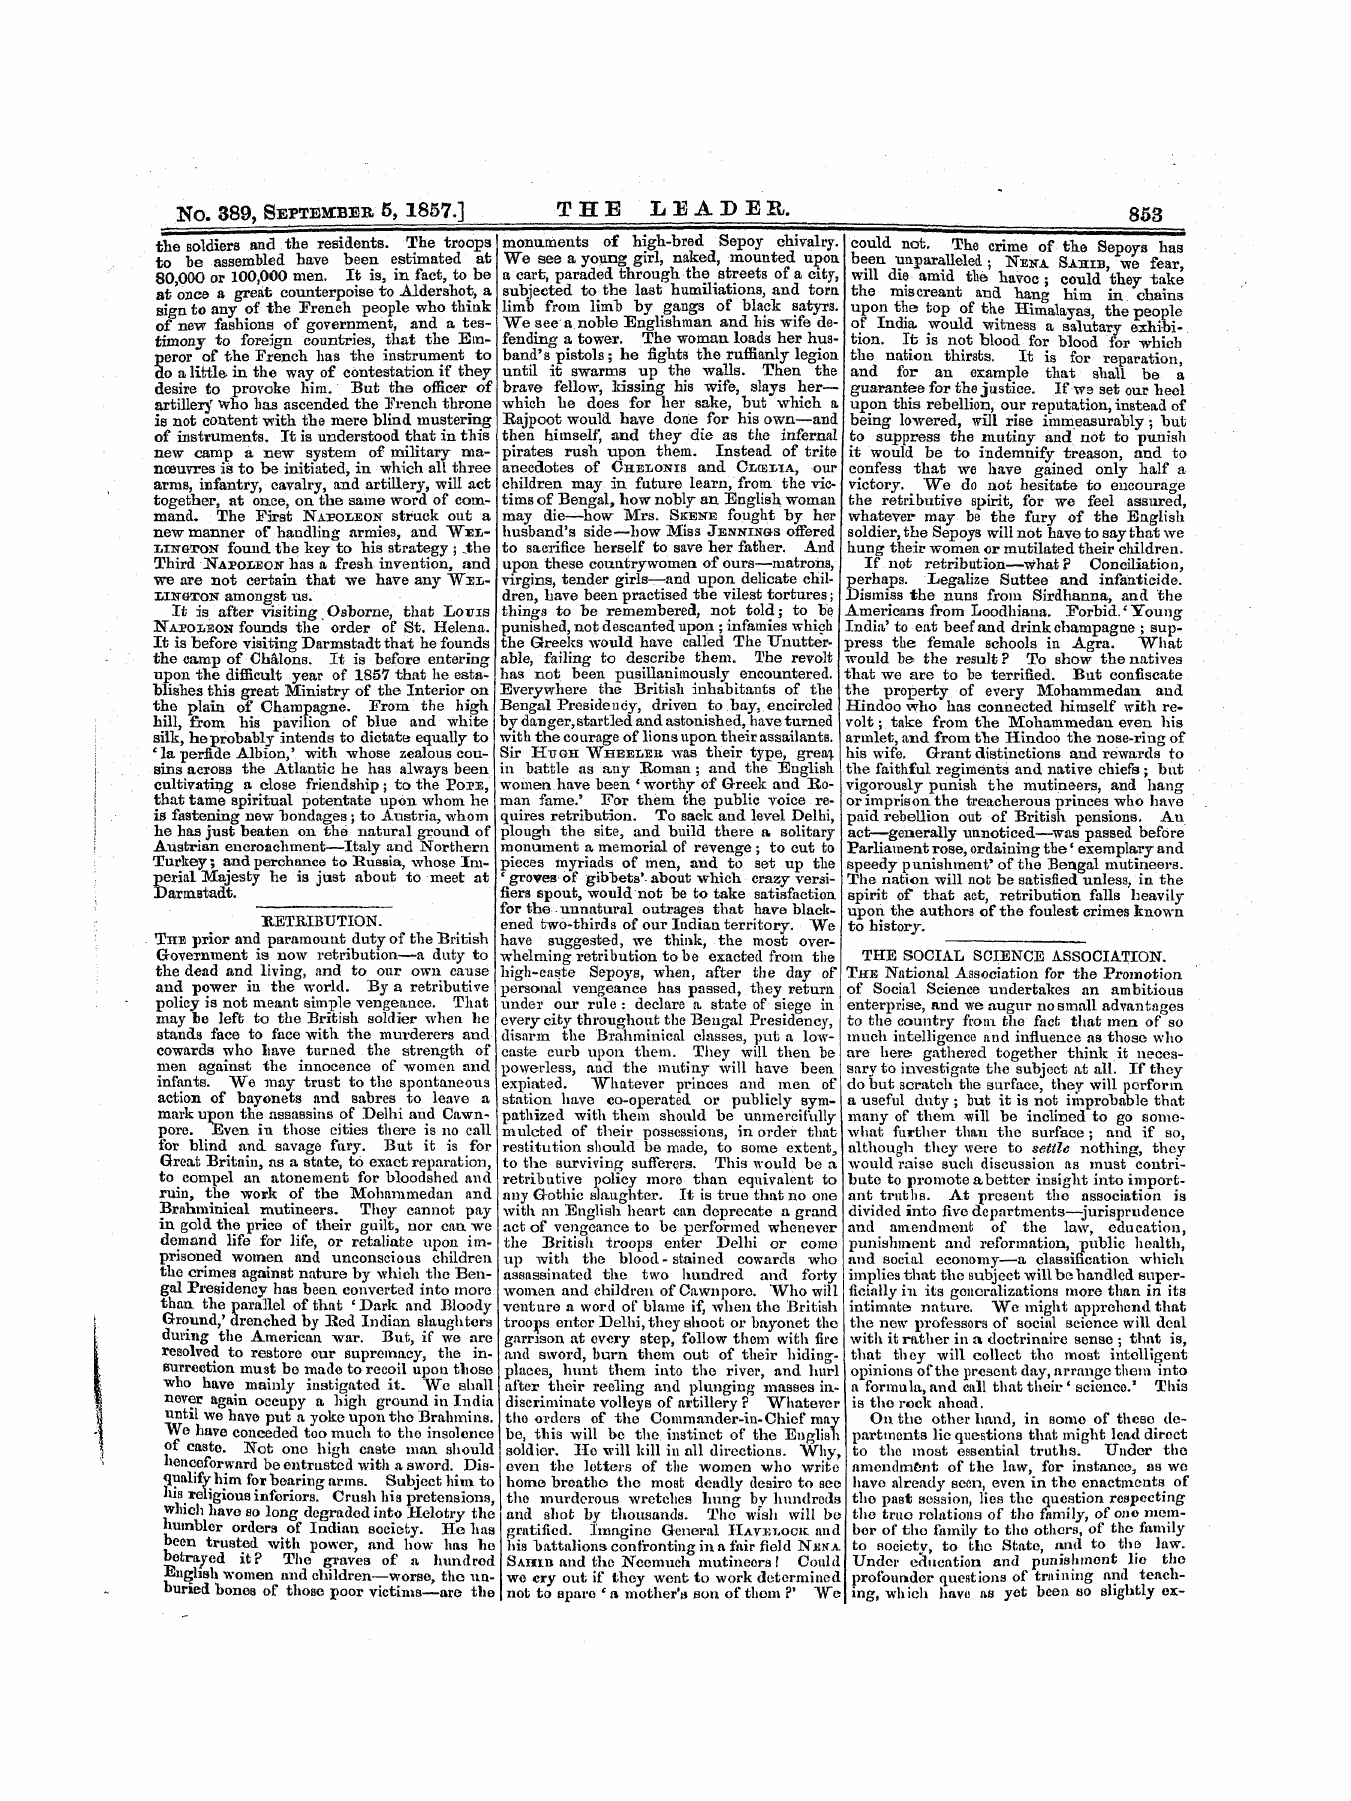 Leader (1850-1860): jS F Y, 1st edition - [ Retribution